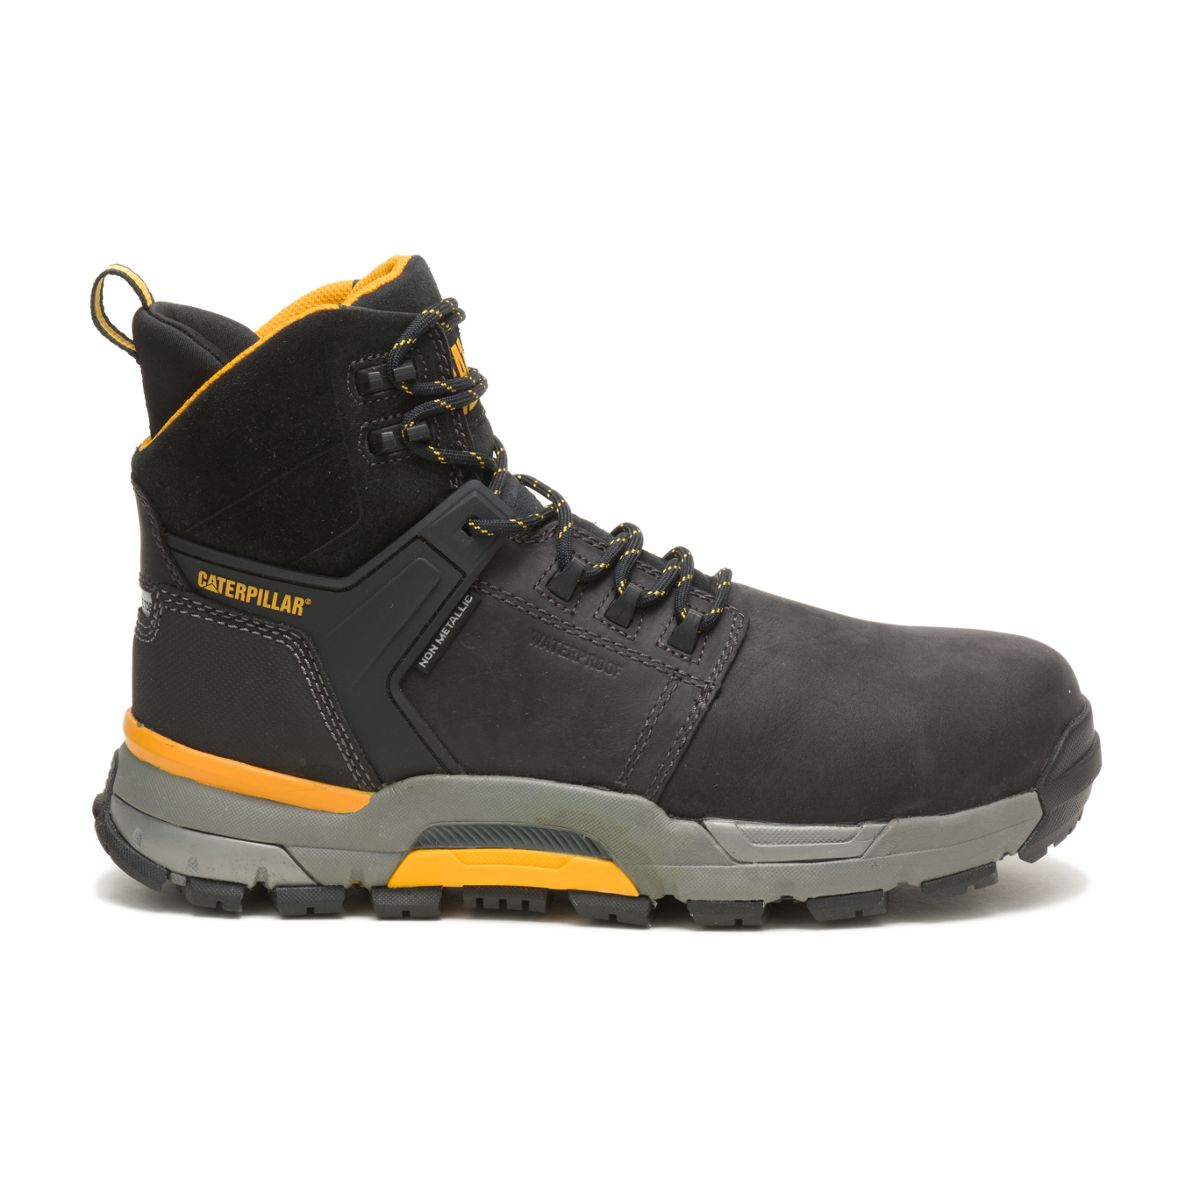 waterproof oil resistant work boots